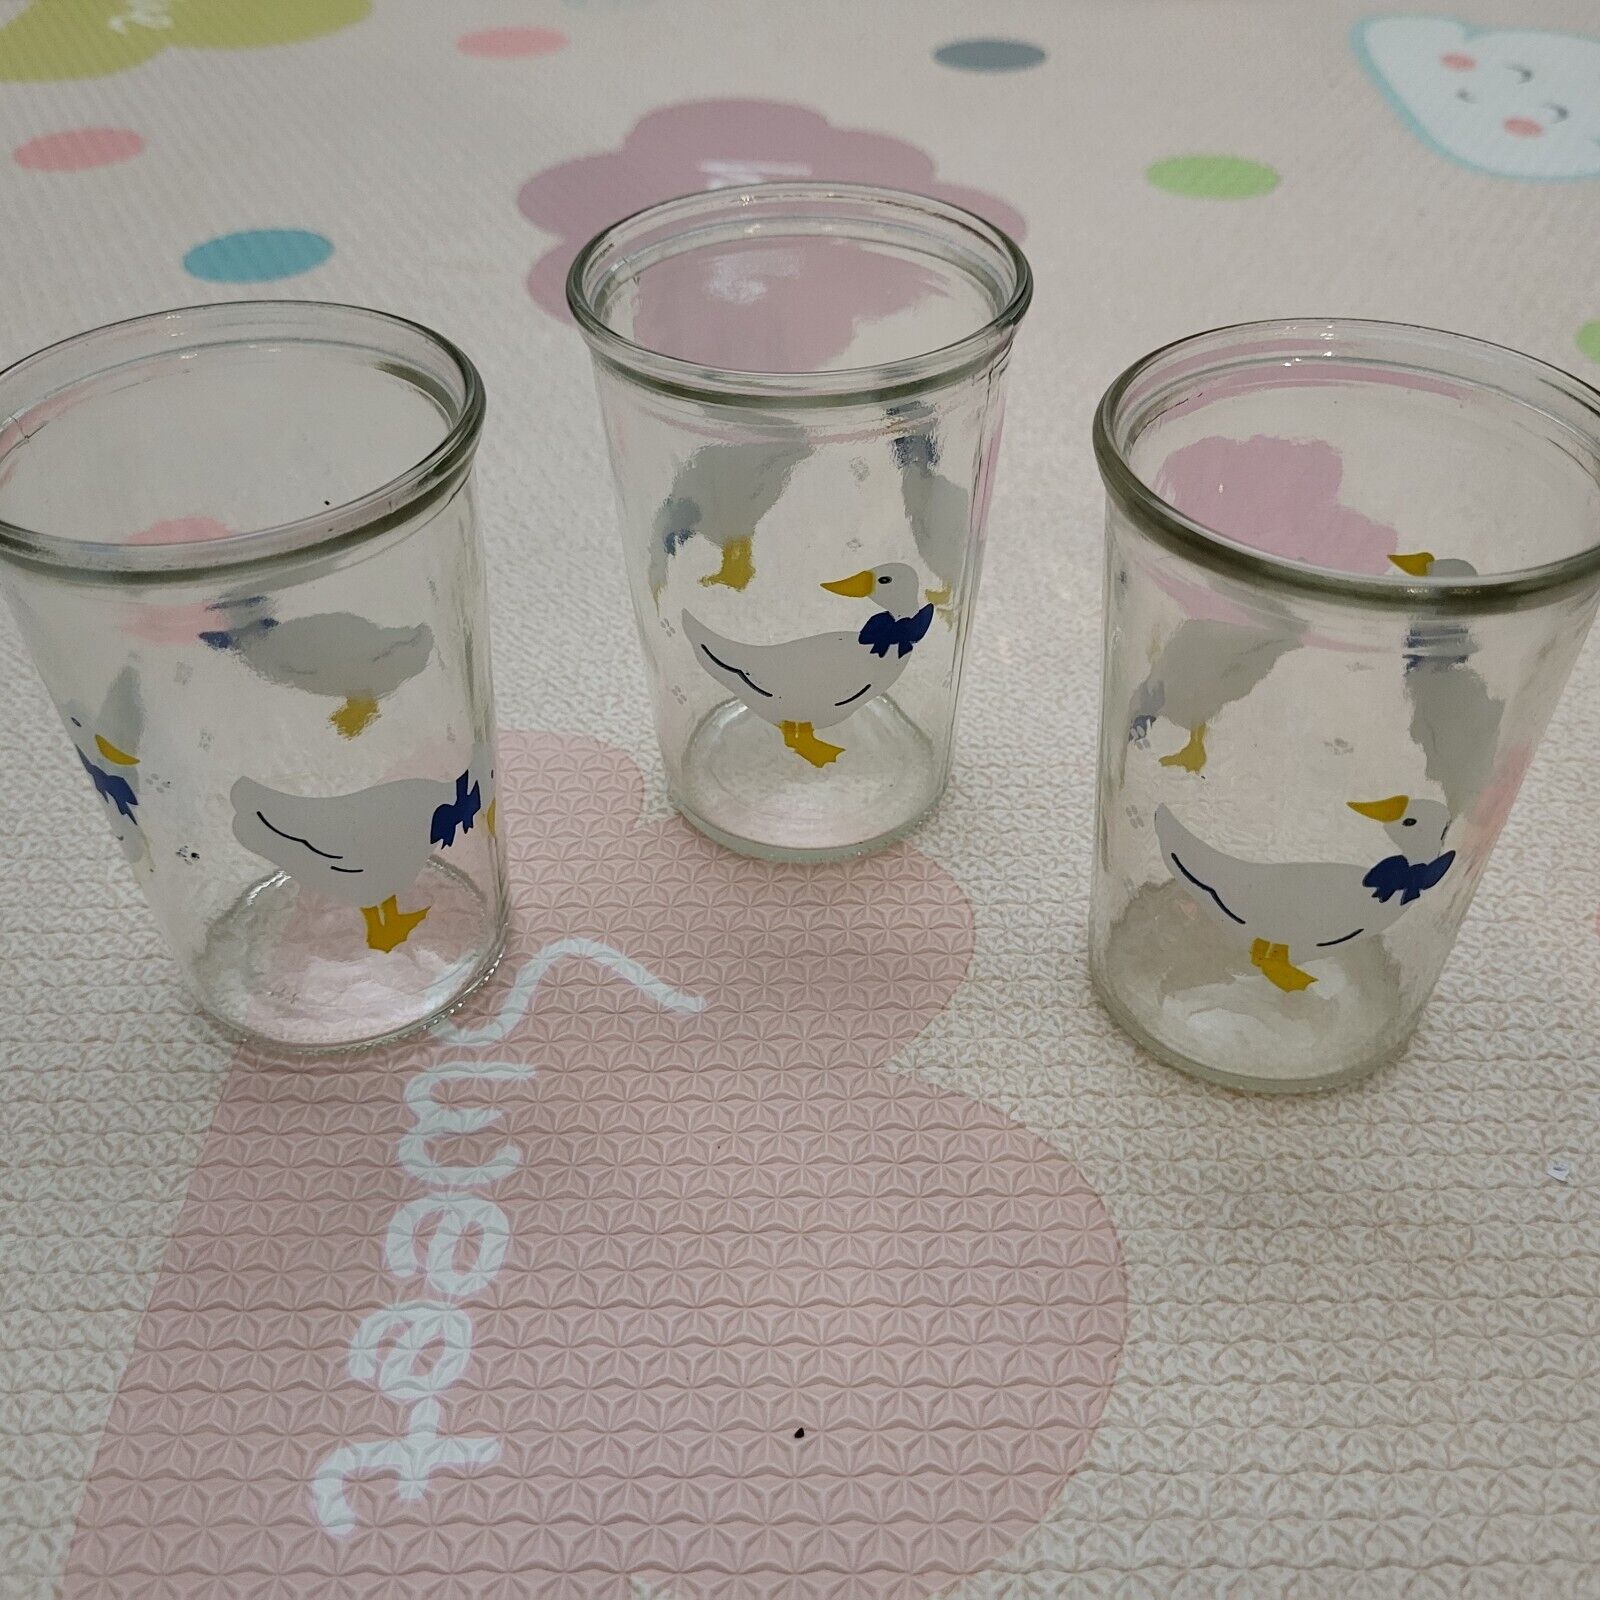 LOT BAMA Jelly Jar White Ducks Chicks  Geese Blue Bows Juice Glasses Vintage 4